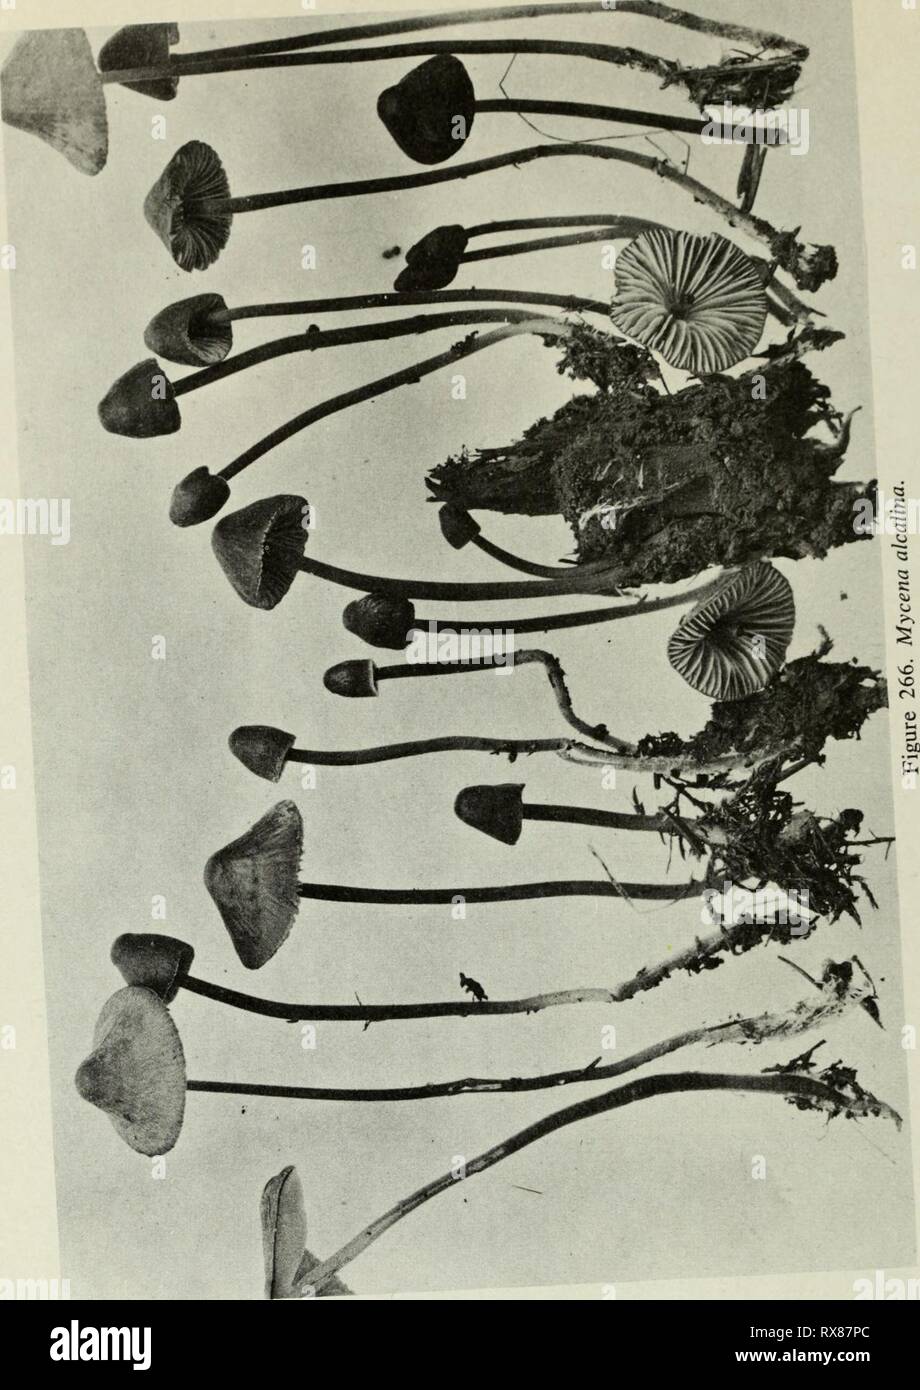 Edible and poisonous mushrooms of Edible and poisonous mushrooms of Canada ediblepoisonousm00grov Year: 1979  I 267. Pholiota aurivella. 269. F. caperata. 271. P- marginata. 273. P- fiammans. 275. P- squarrosoides. 268. P. aurivella. 270. F. caperata. 272. F. marginata. 21 A. P. spectabilis. 276. Flammula spumosa. 174 Stock Photo